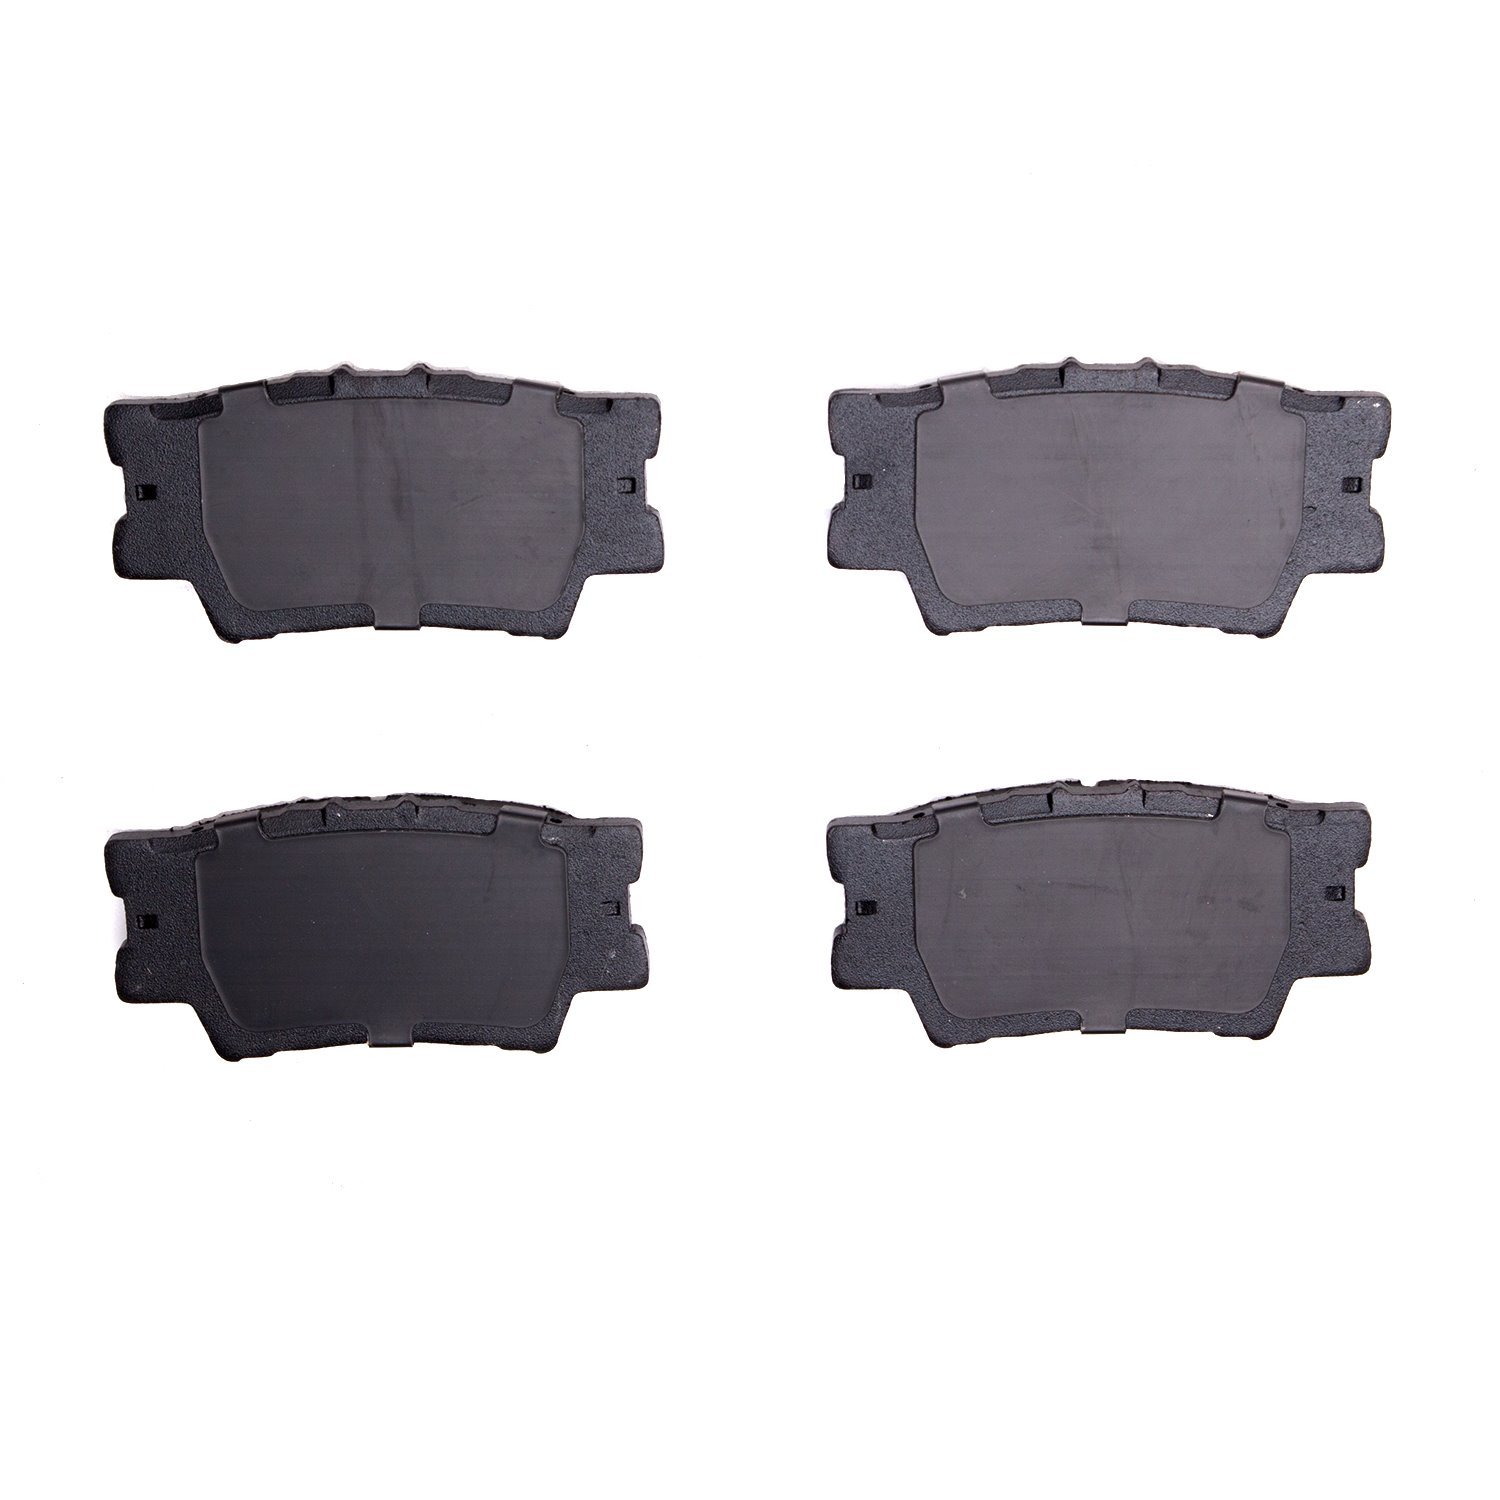 1551-1632-00 5000 Advanced Ceramic Brake Pads, Fits Select Multiple Makes/Models, Position: Rear